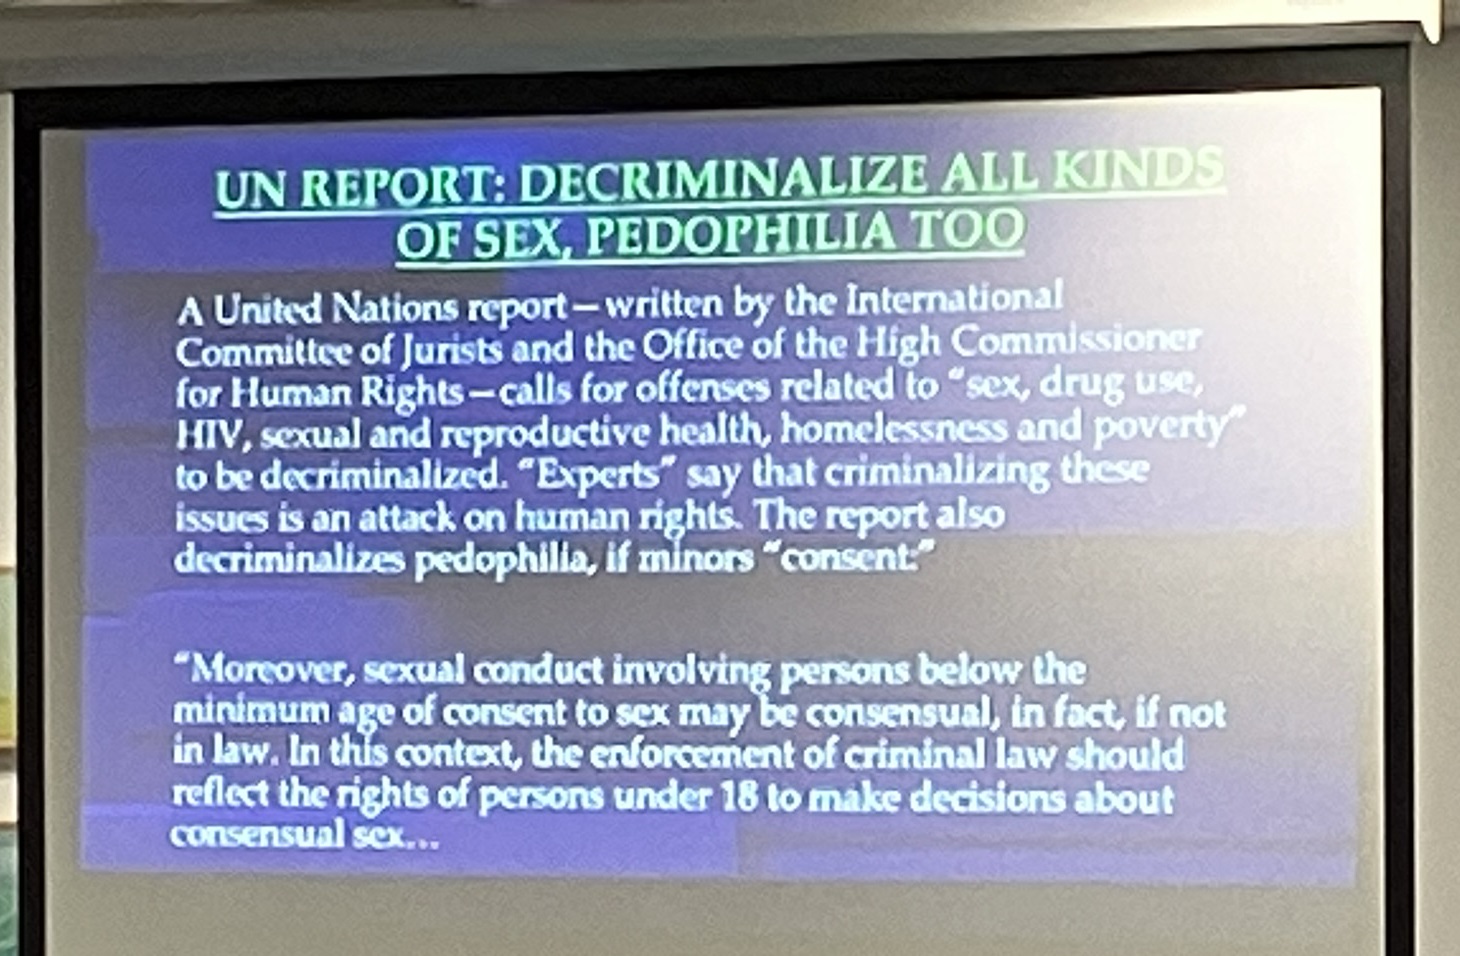 A United Nations report encourages decriminalizing pedophilia.